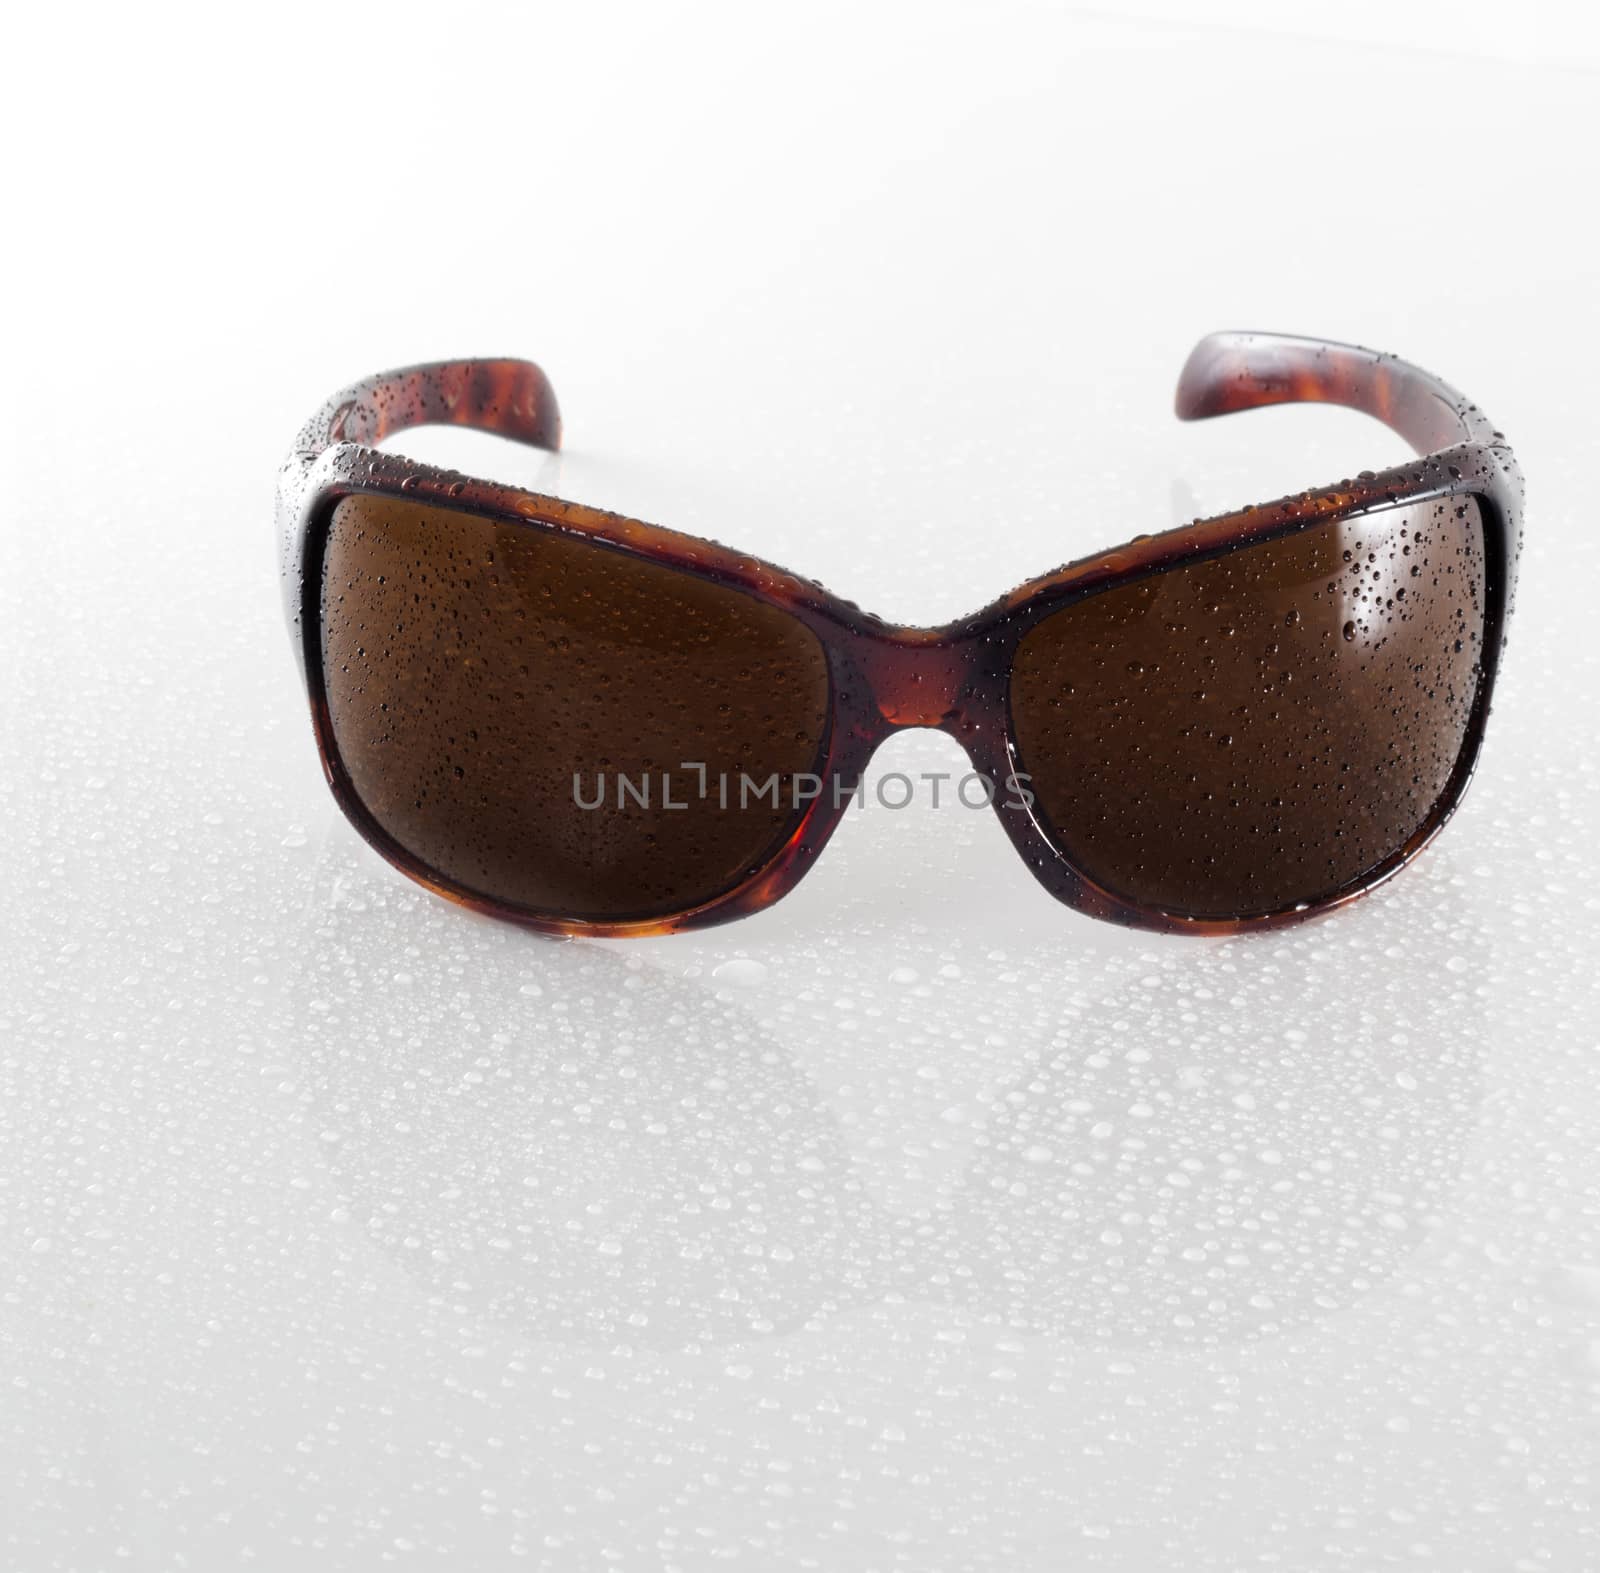 Wet sunglasses isolated on white background by avanheertum